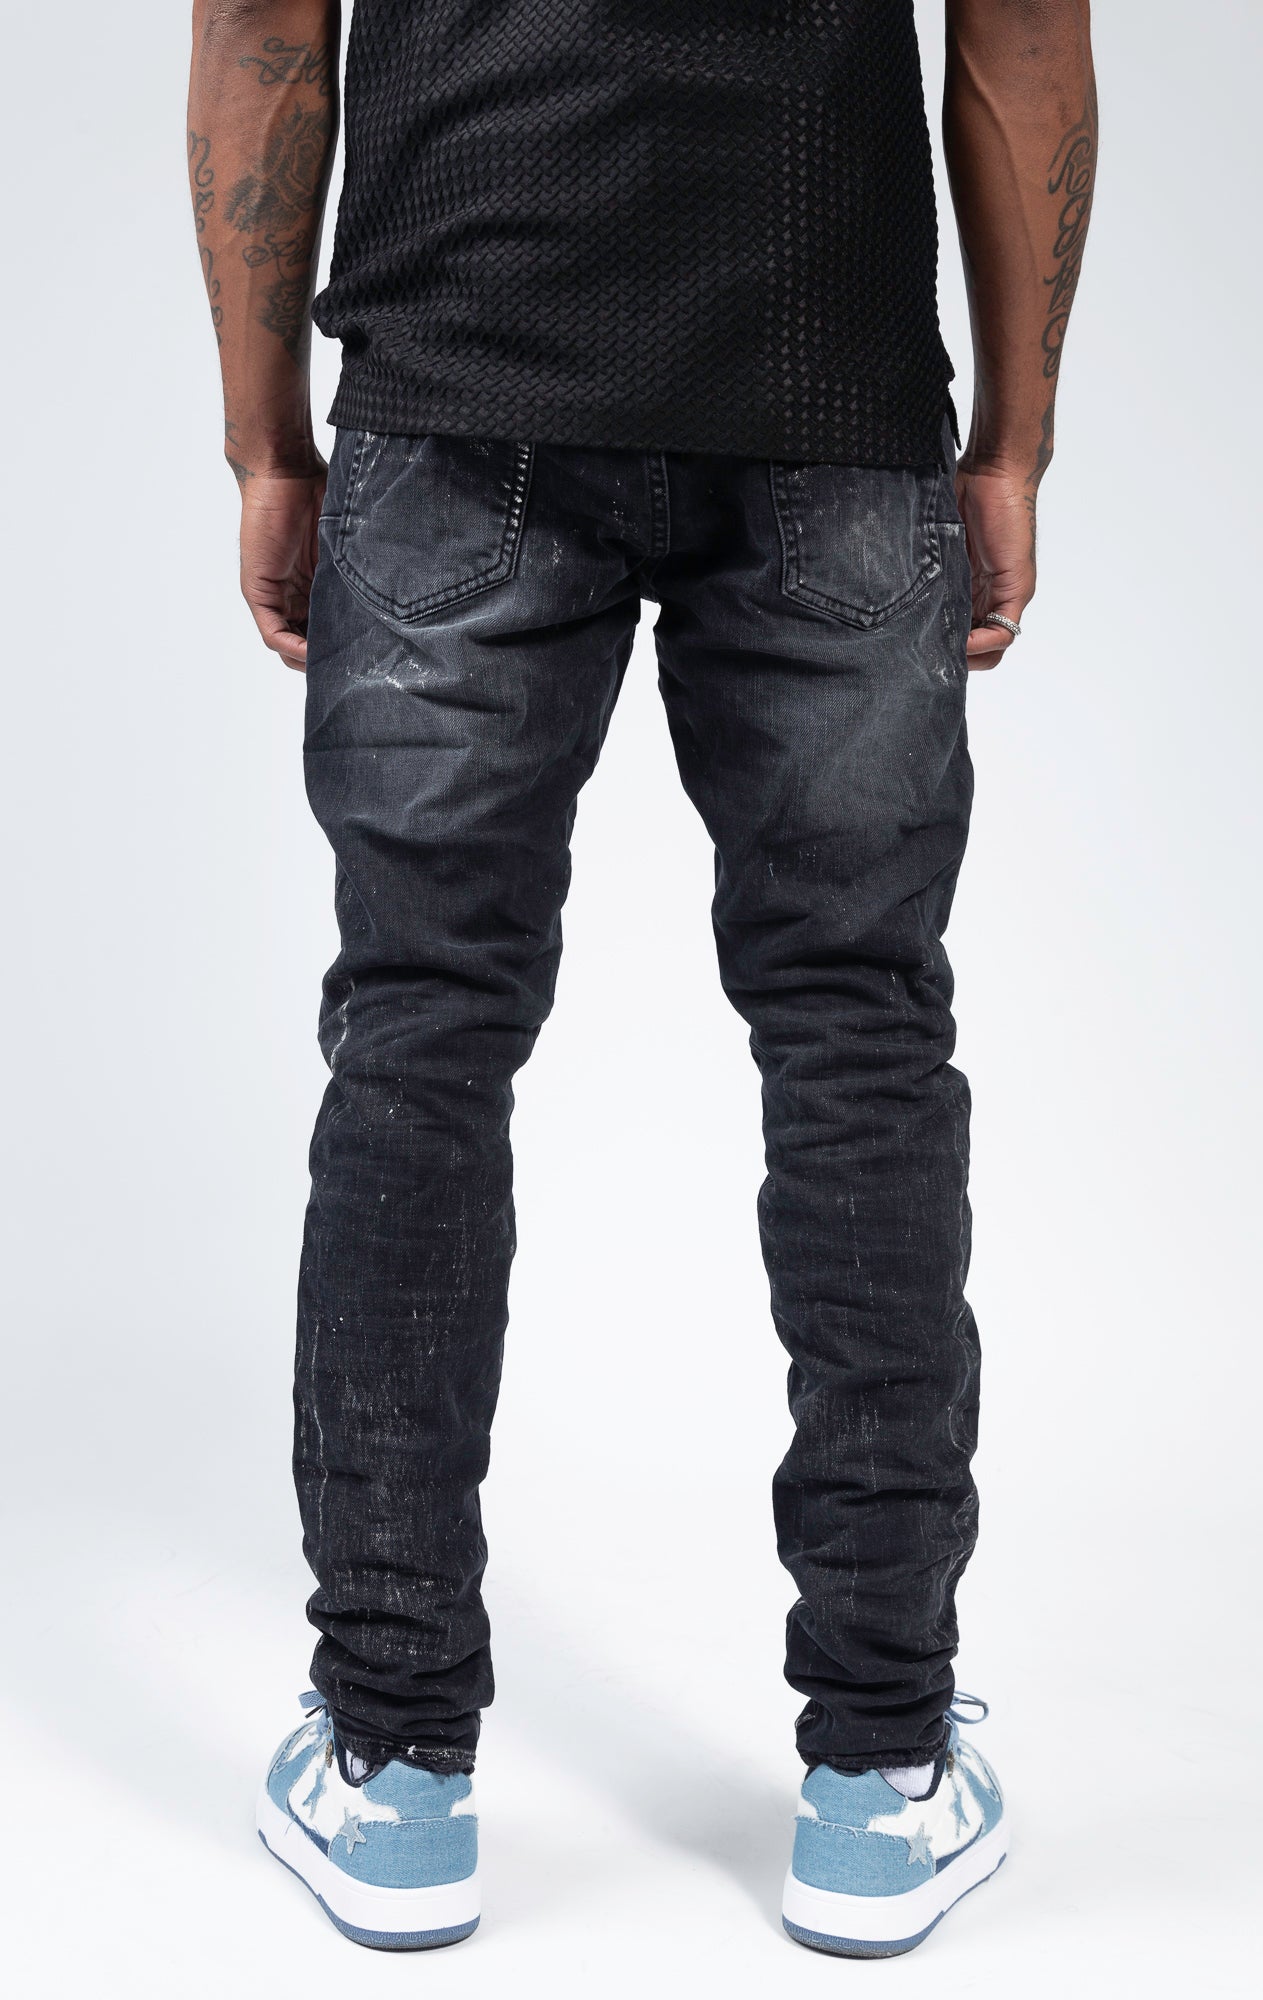 mid-rise, slim-fit, versatile faded finish pants